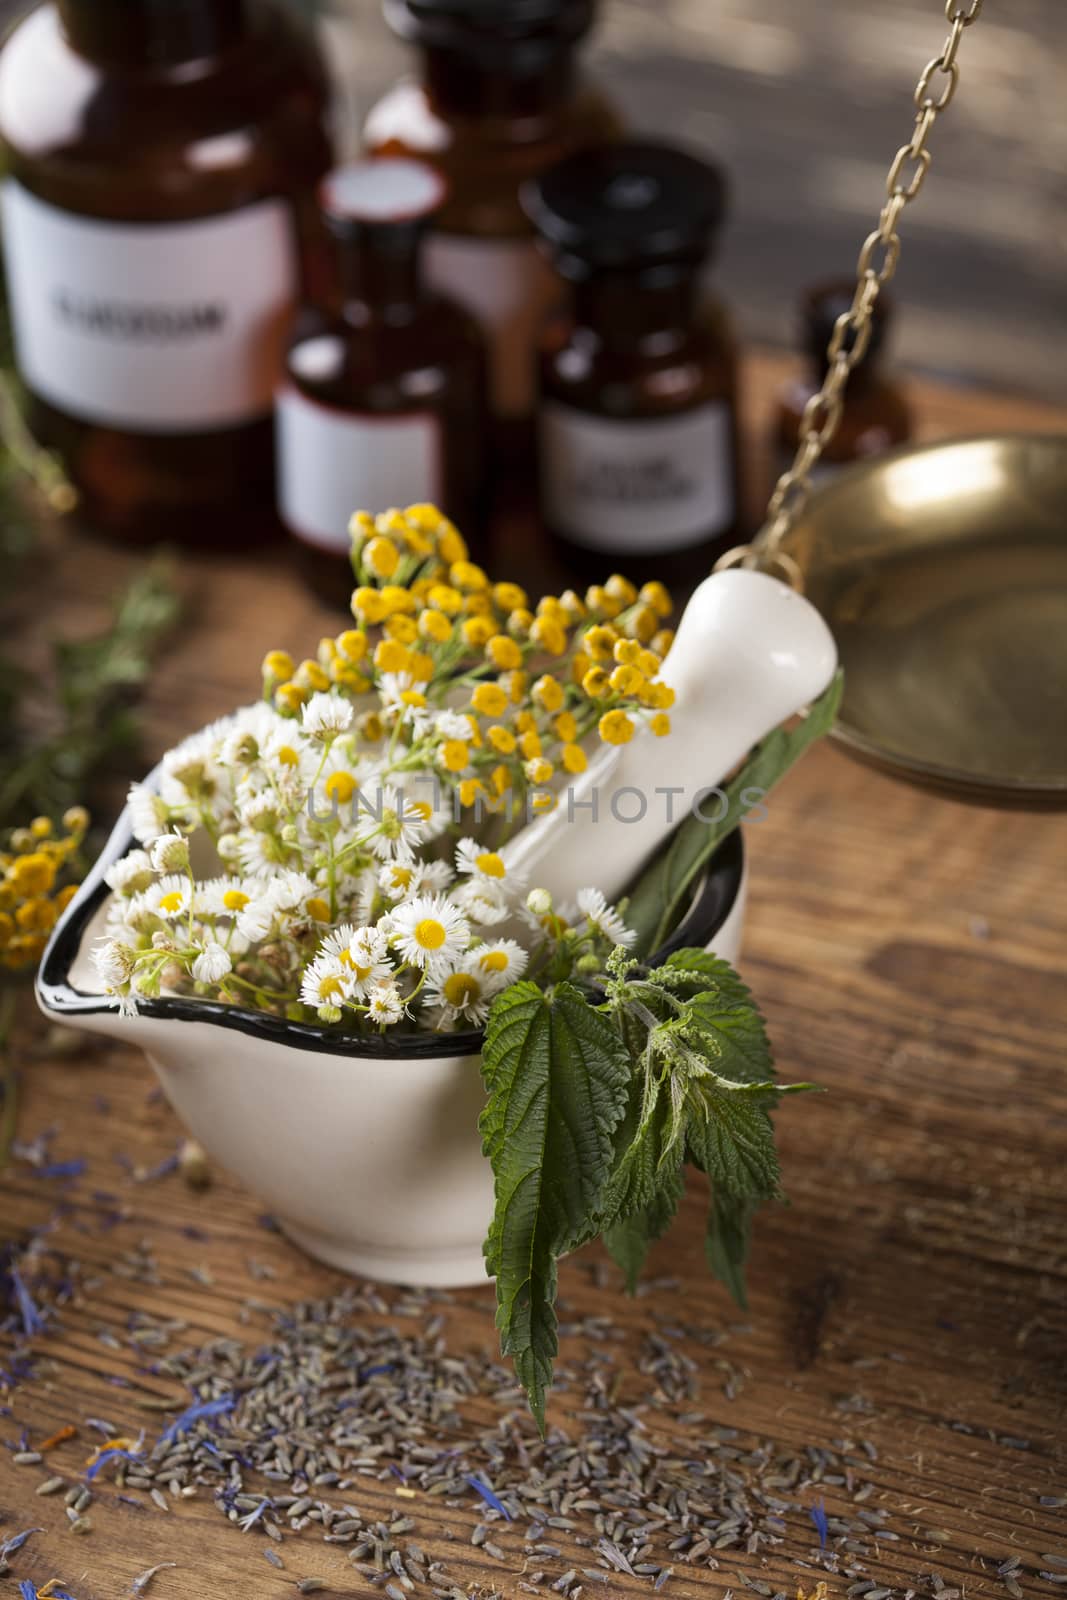 Herbs medicine,Natural remedy and mortar on vintage wooden desk background